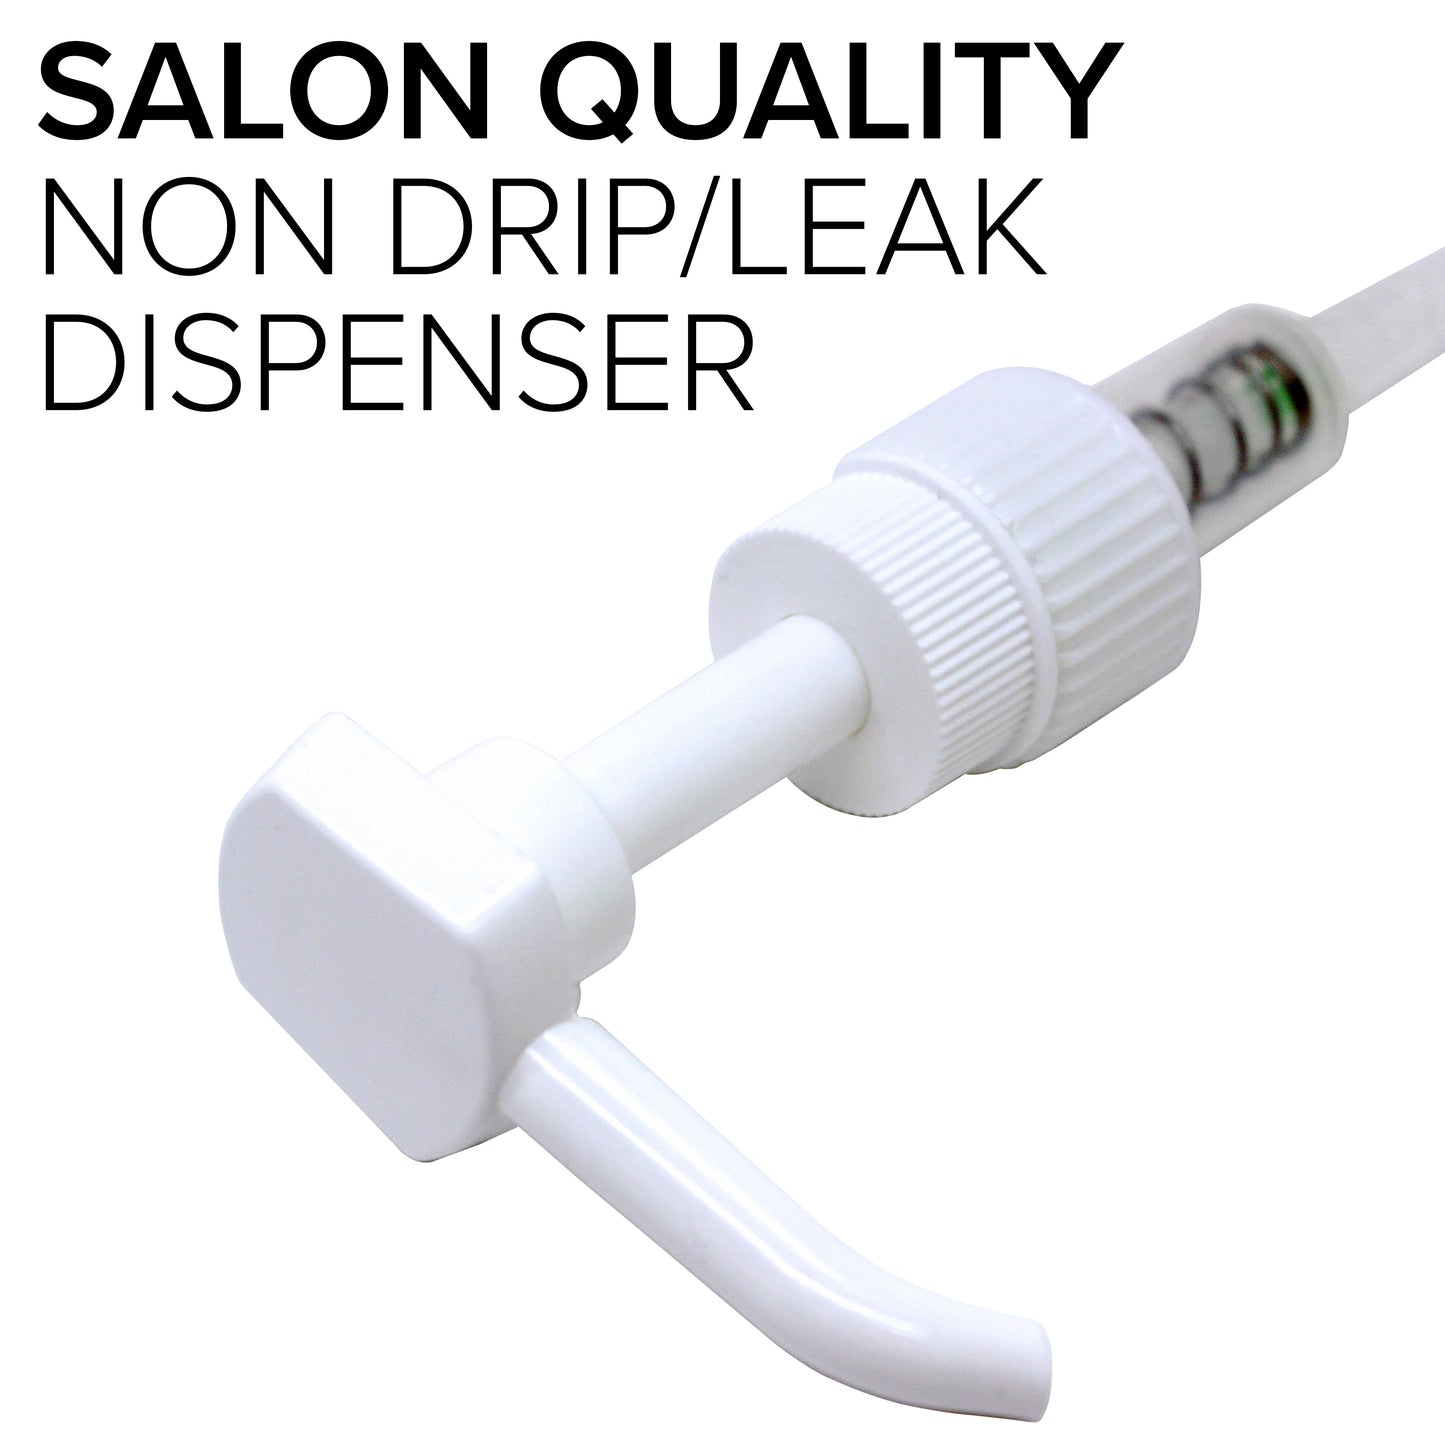 NYK1 Professional Universal Fit Shampoo Pump - Dispenses 4ml Dose